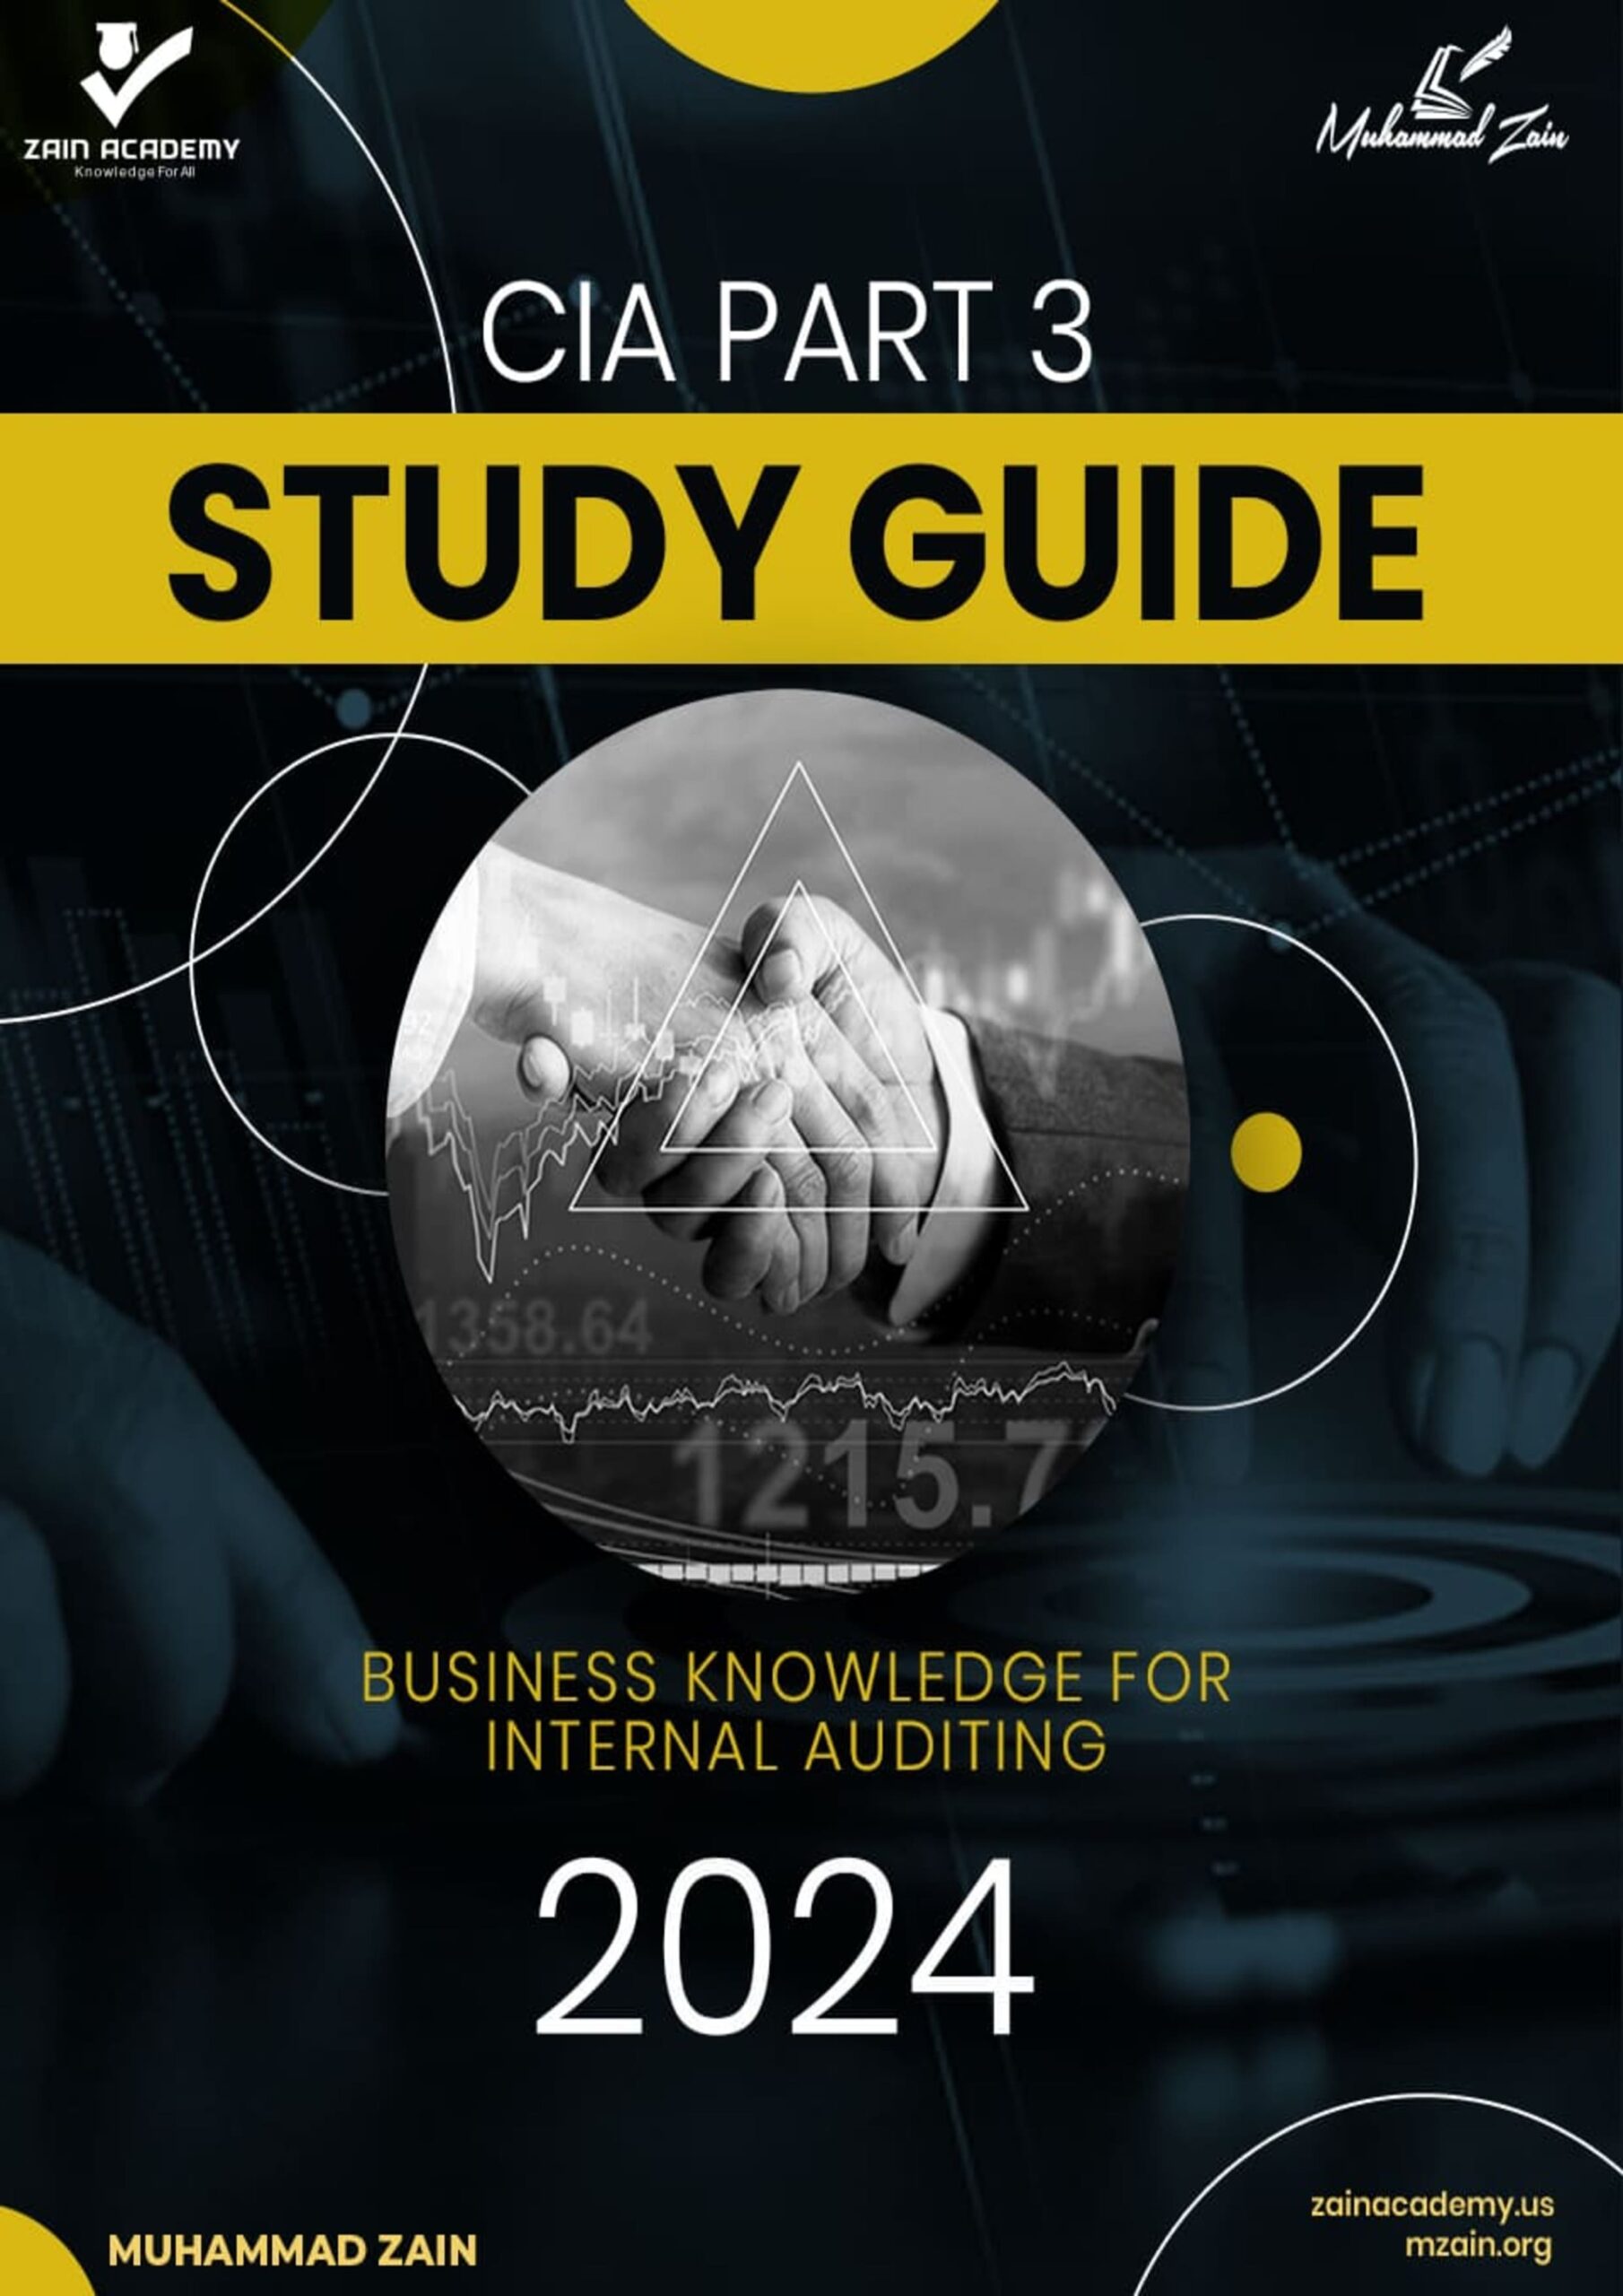 cia part 3 study guide 2024